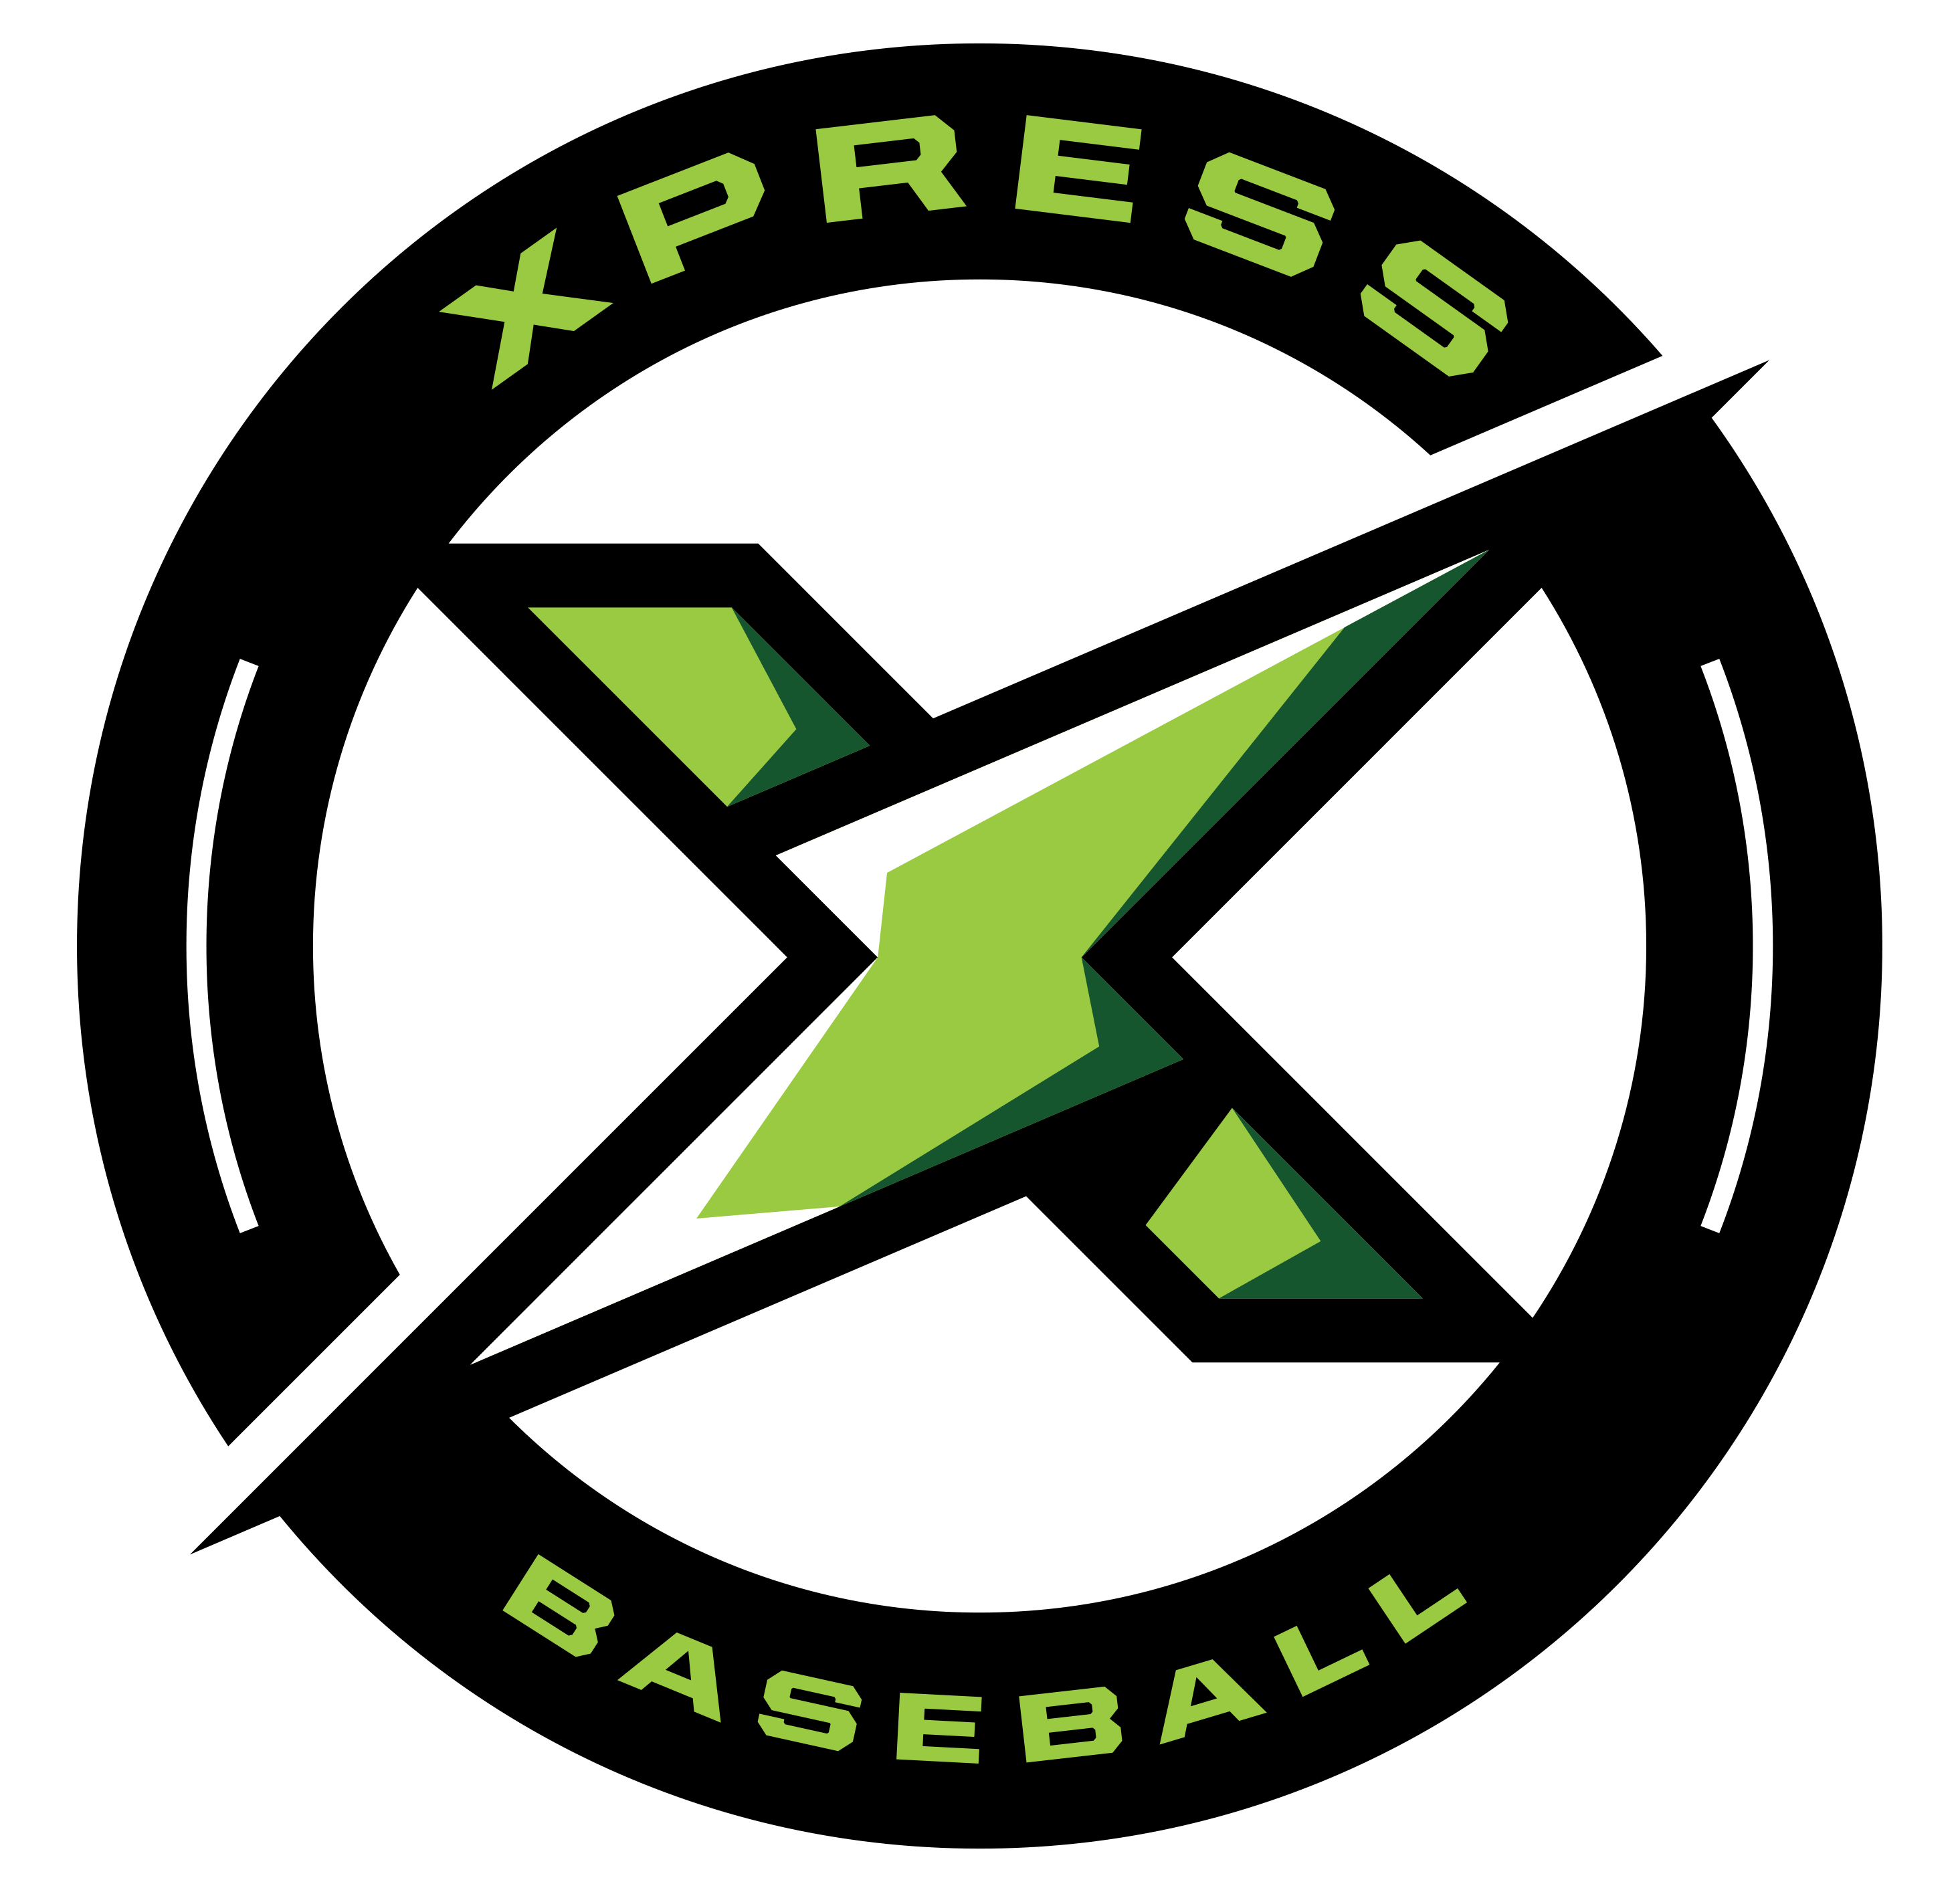 Xpress Baseball Club | Branding and Apparel Design